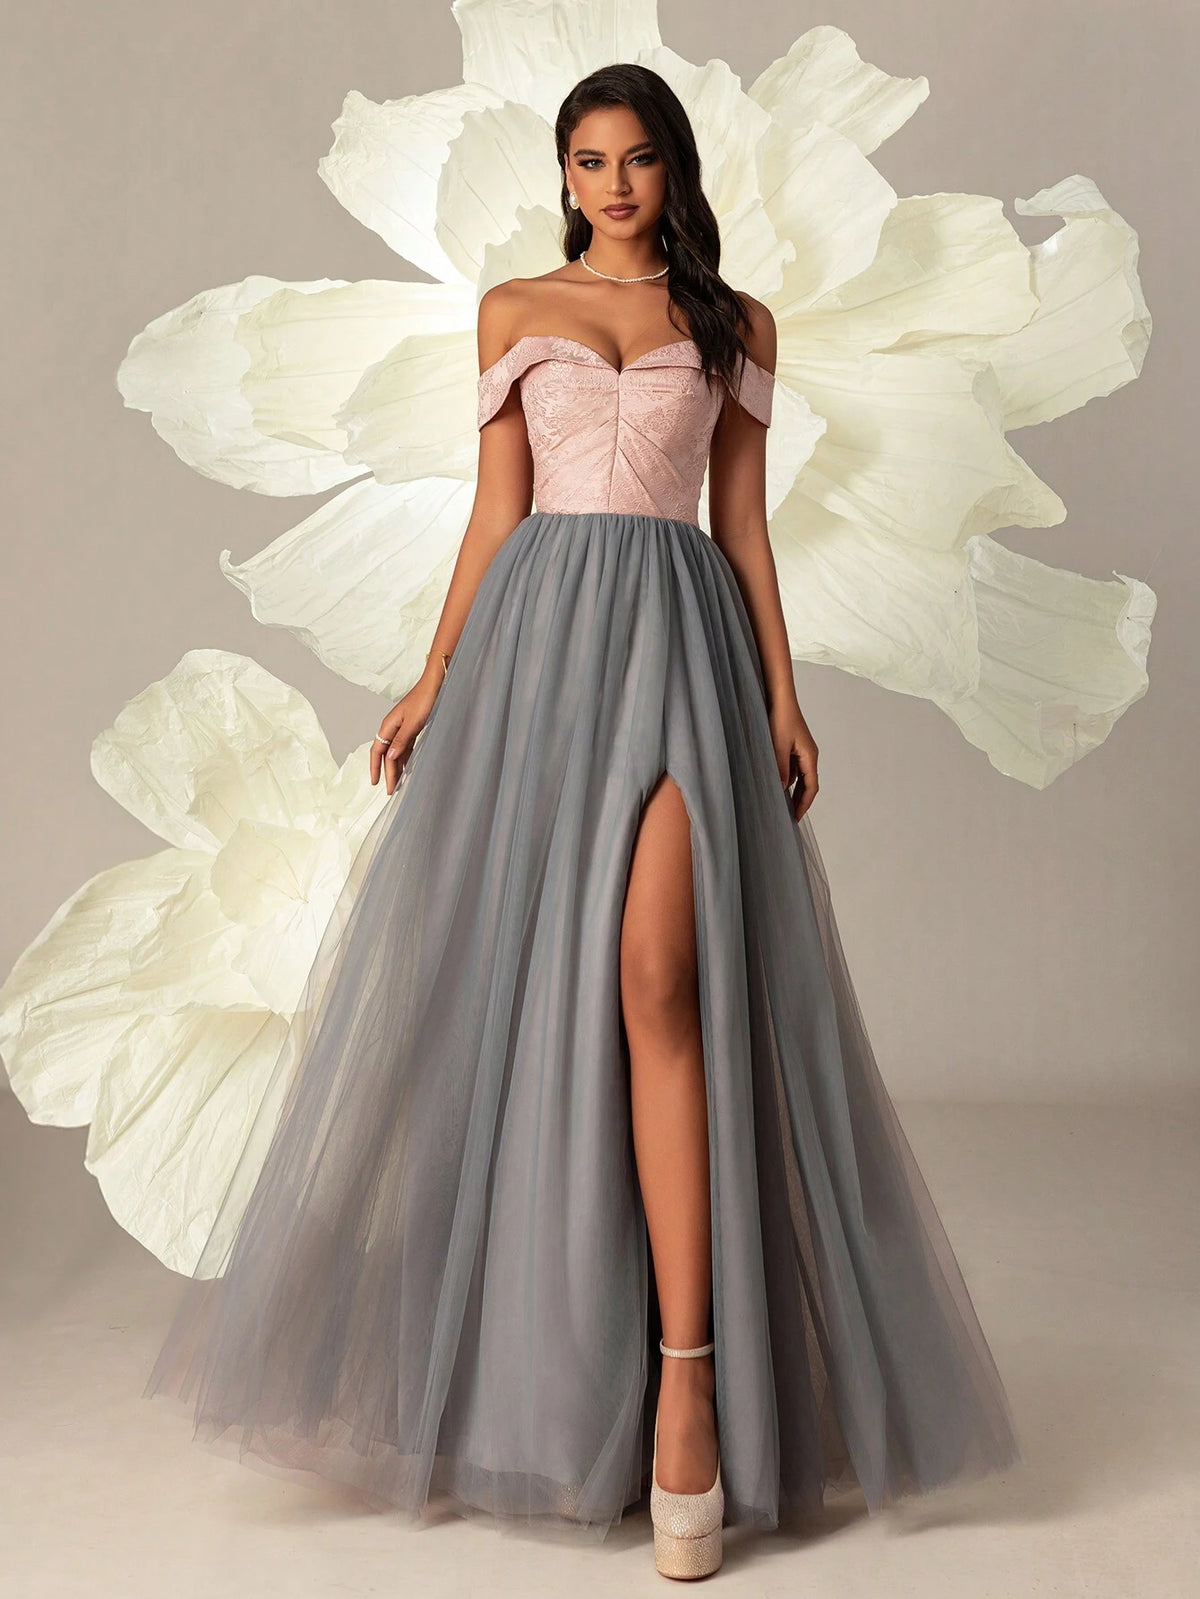 VIPGIRL Elegant One Shoulder Mesh Evening Dress